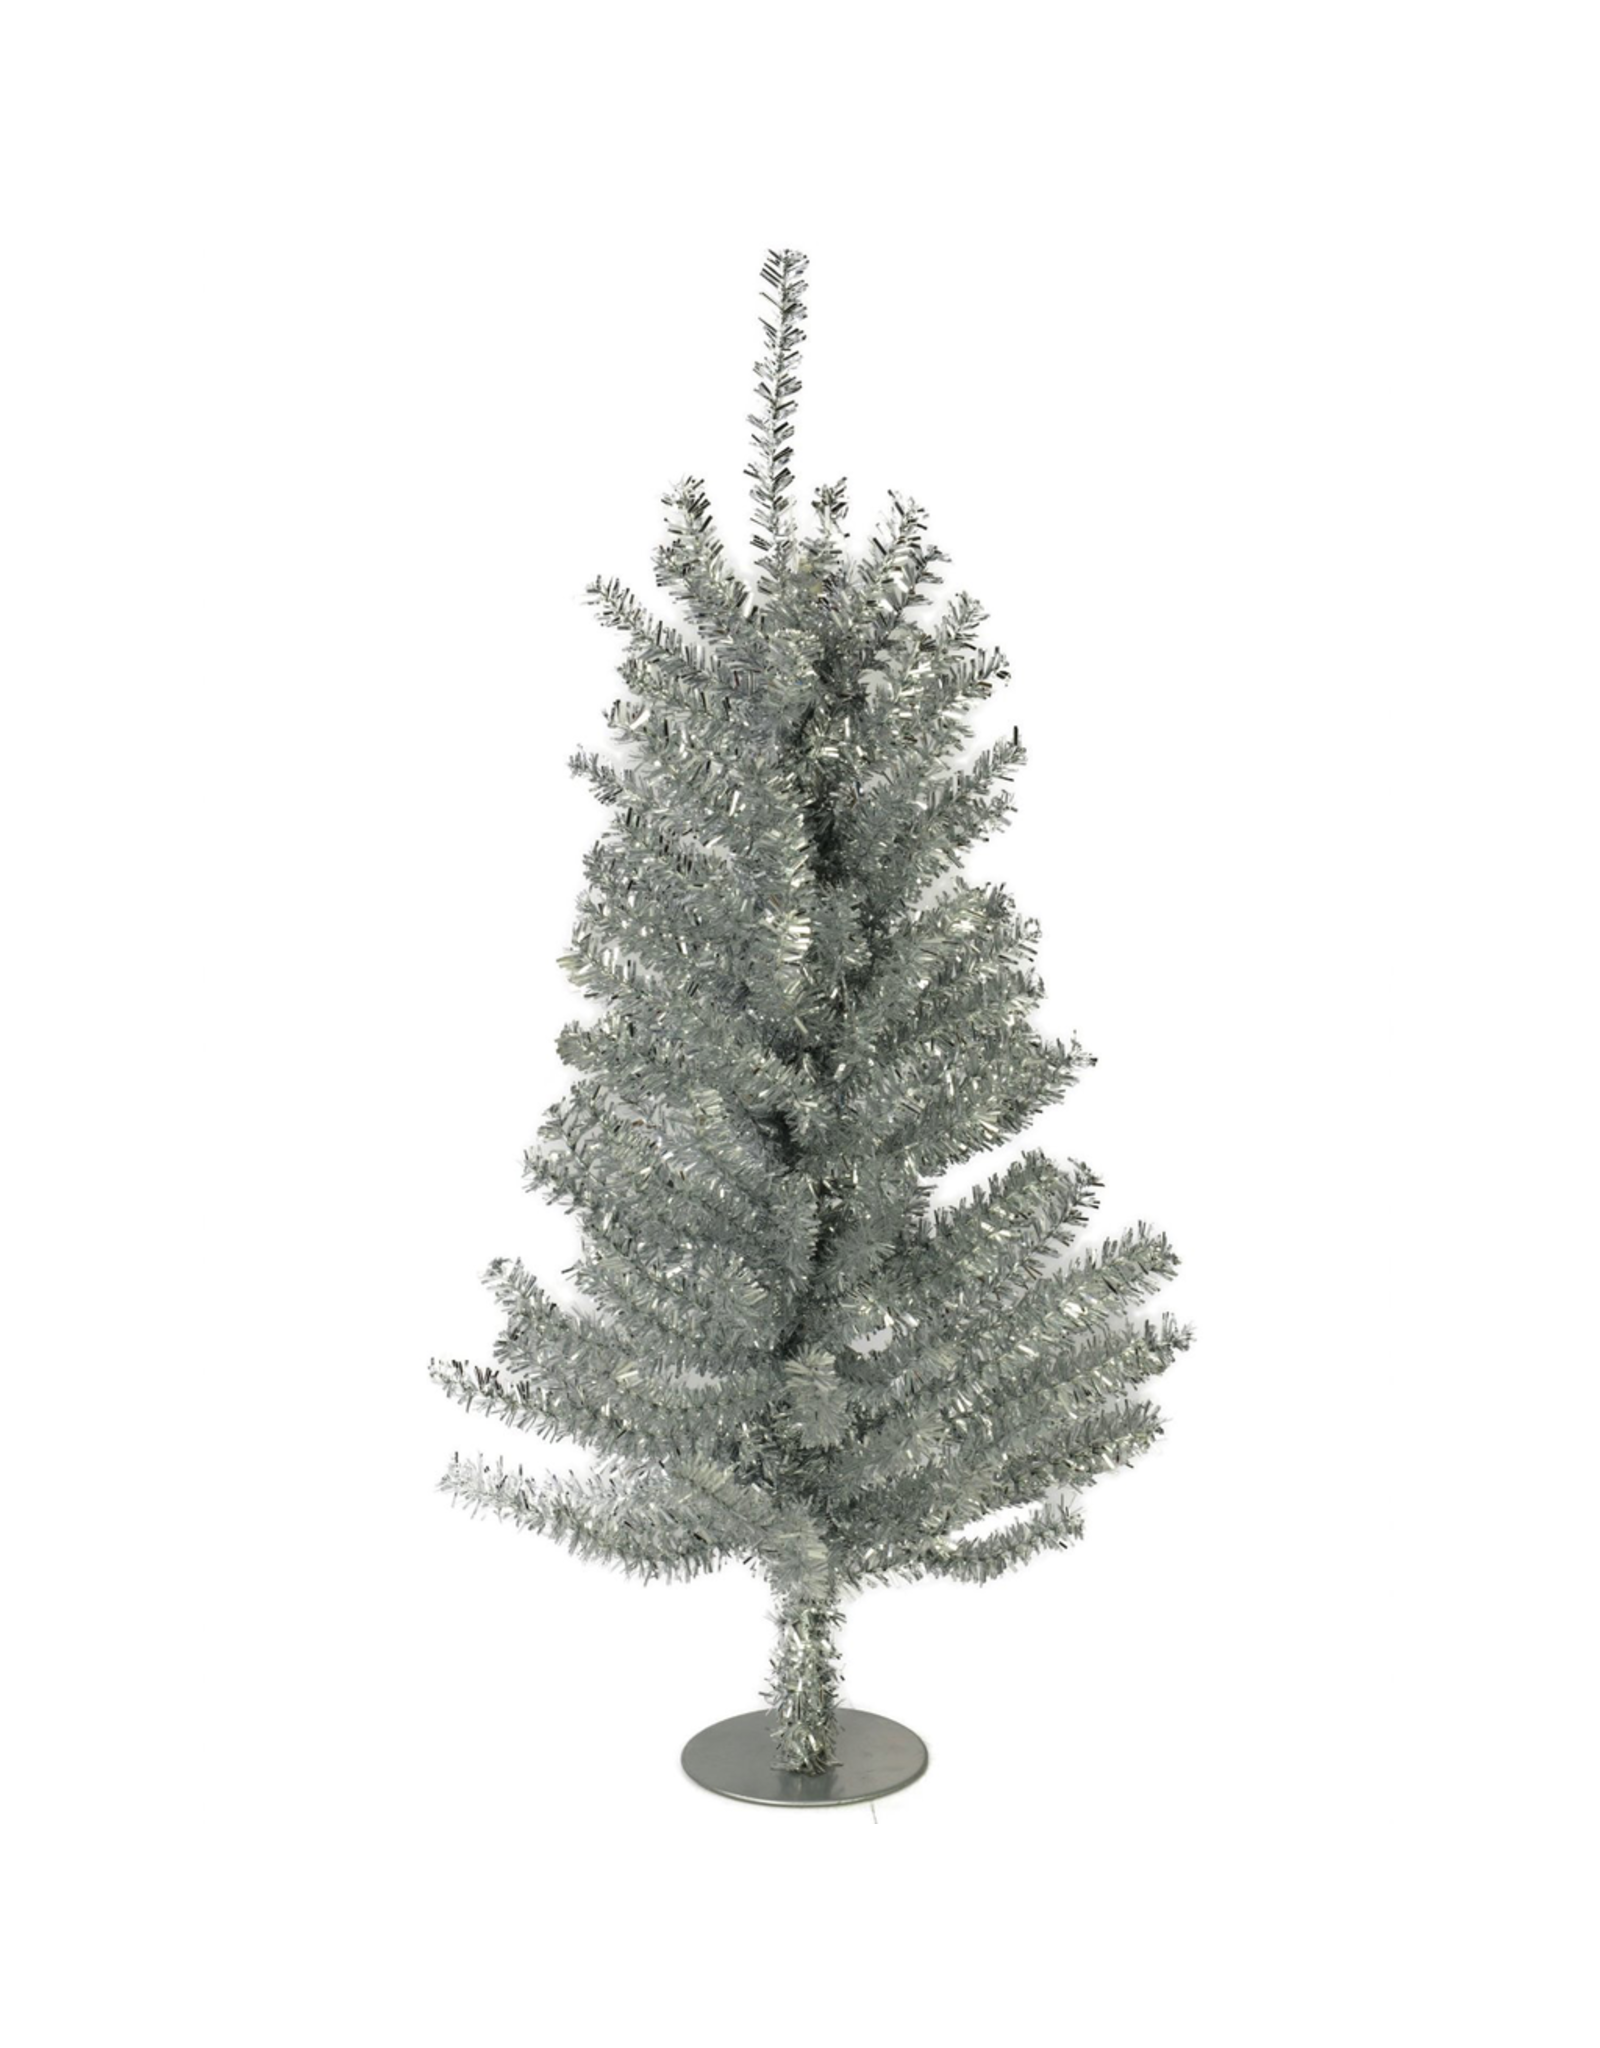 Kurt Adler Silver Christmas Tree 18 inch Miniature Tree